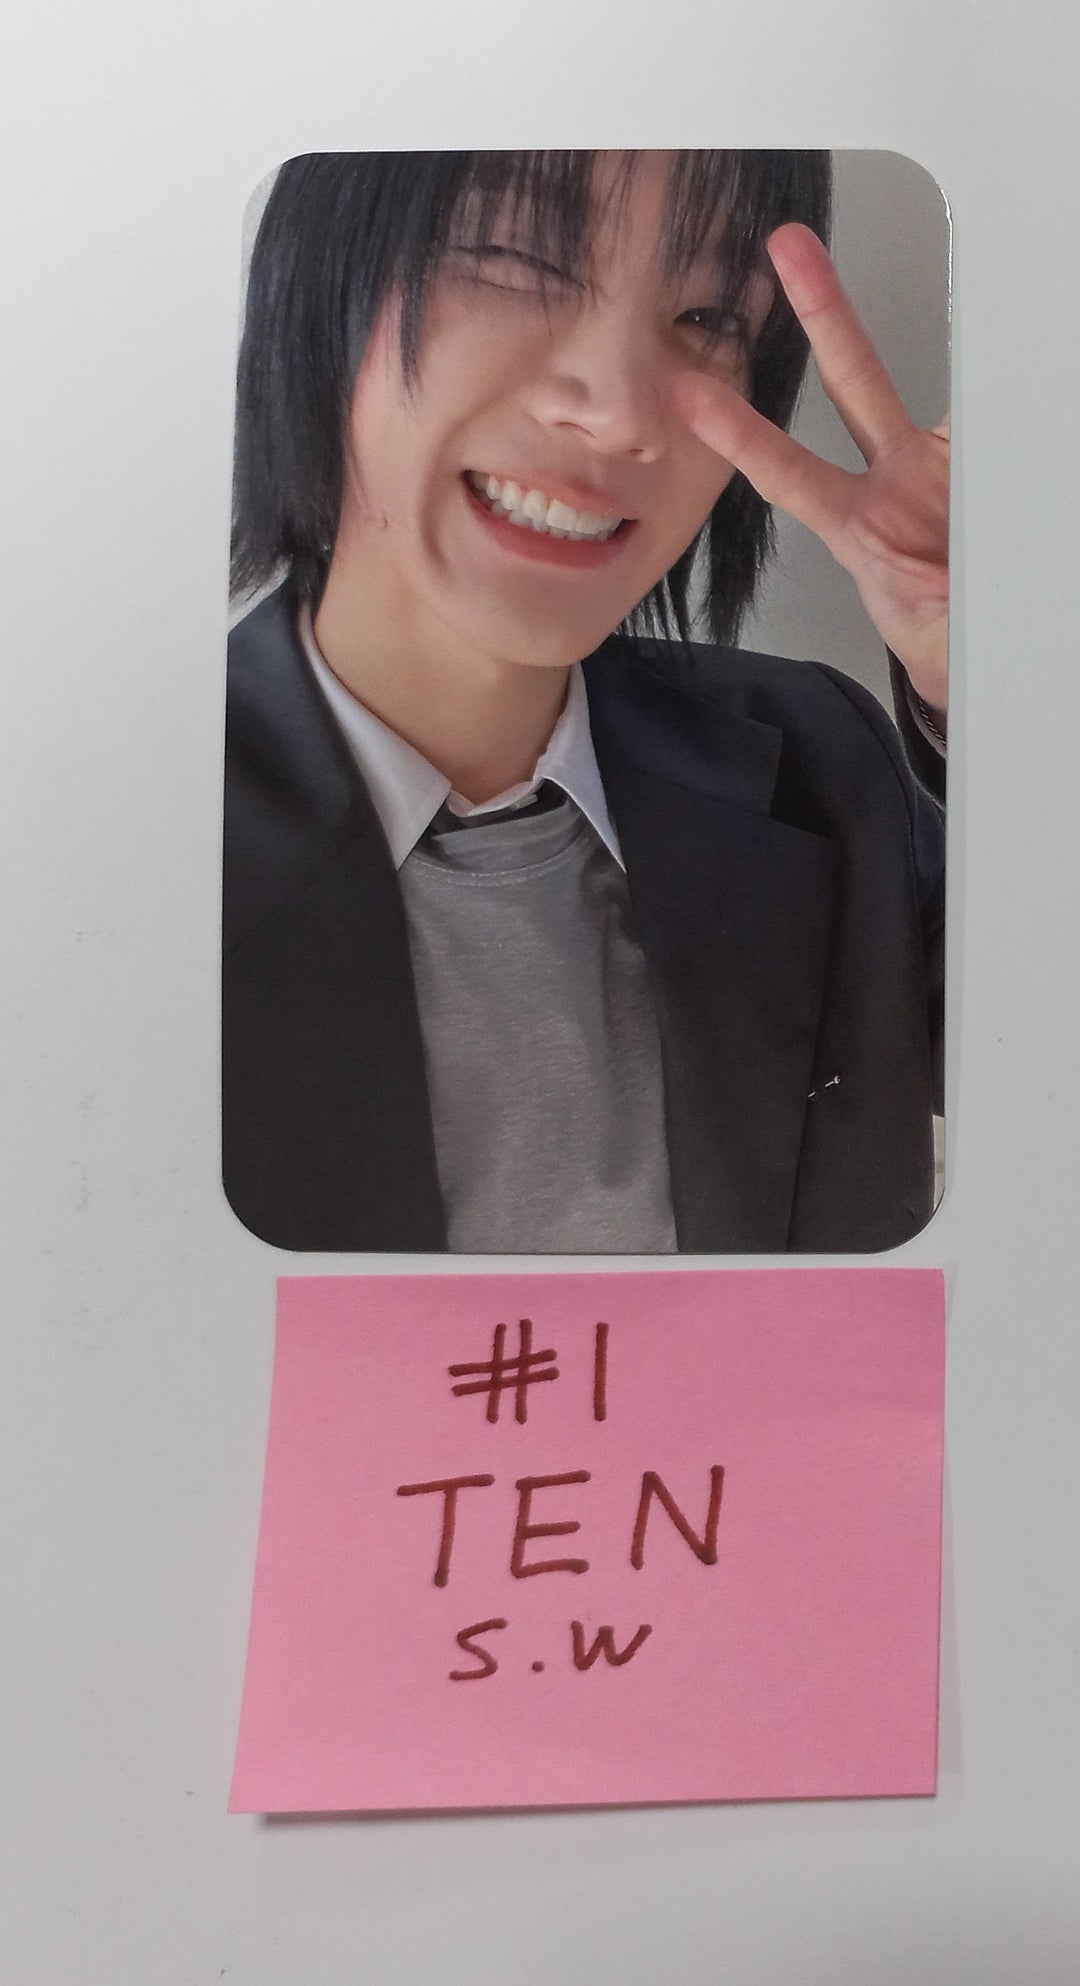 TEN 1st Mini "TEN" - Soundwave Pre-Order Benefit Photocard [24.02.21]